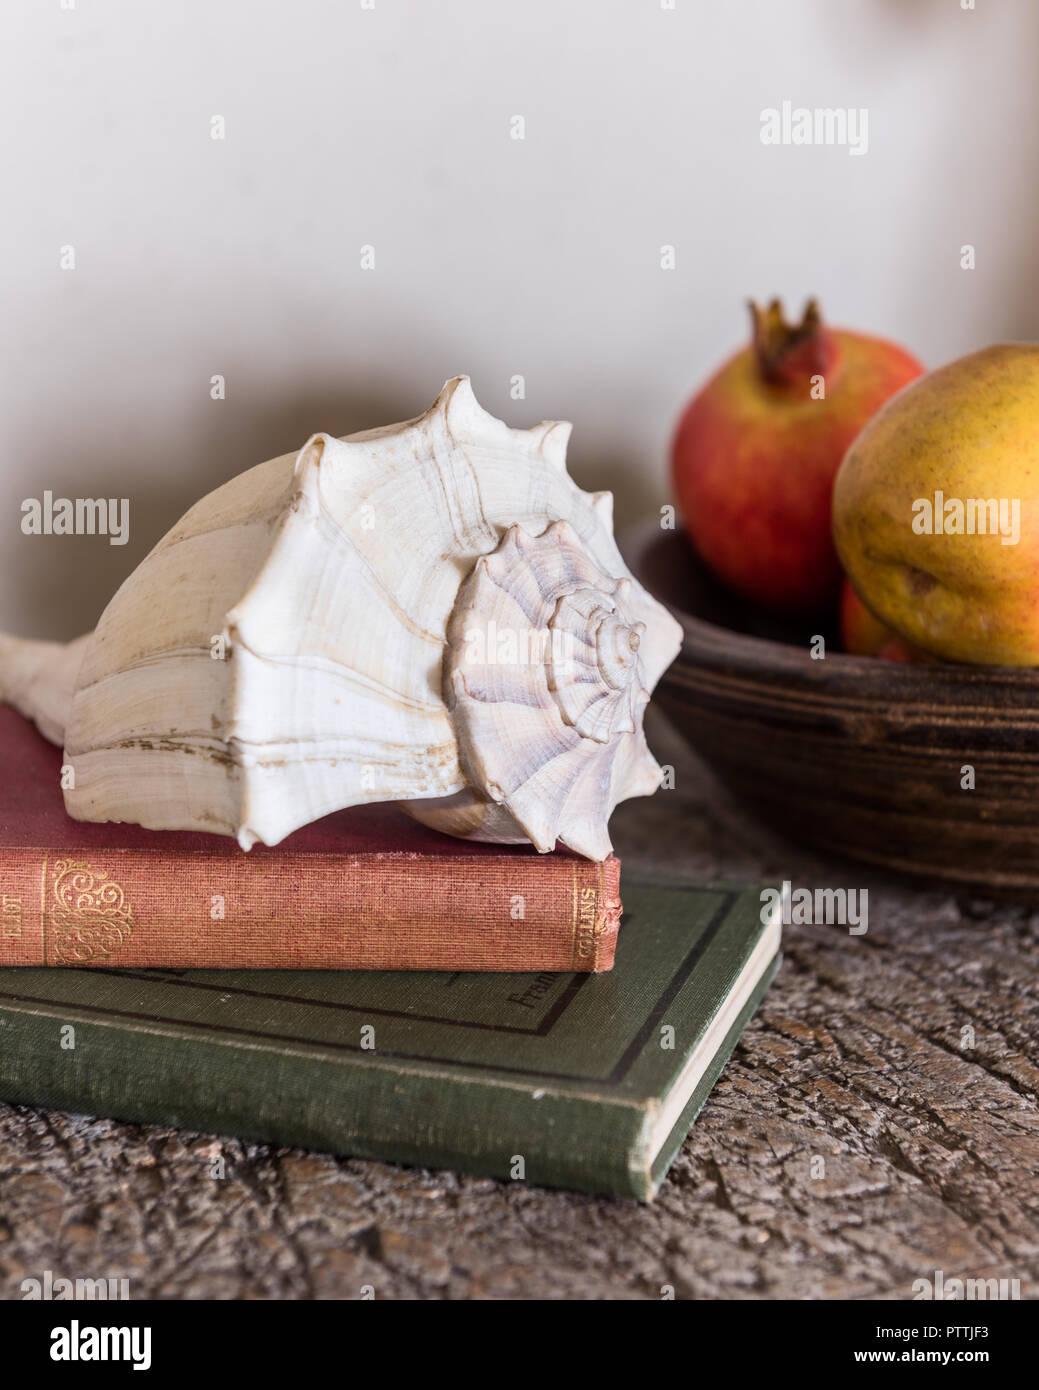 Seashell on hardbacked books with pomegranate Stock Photo